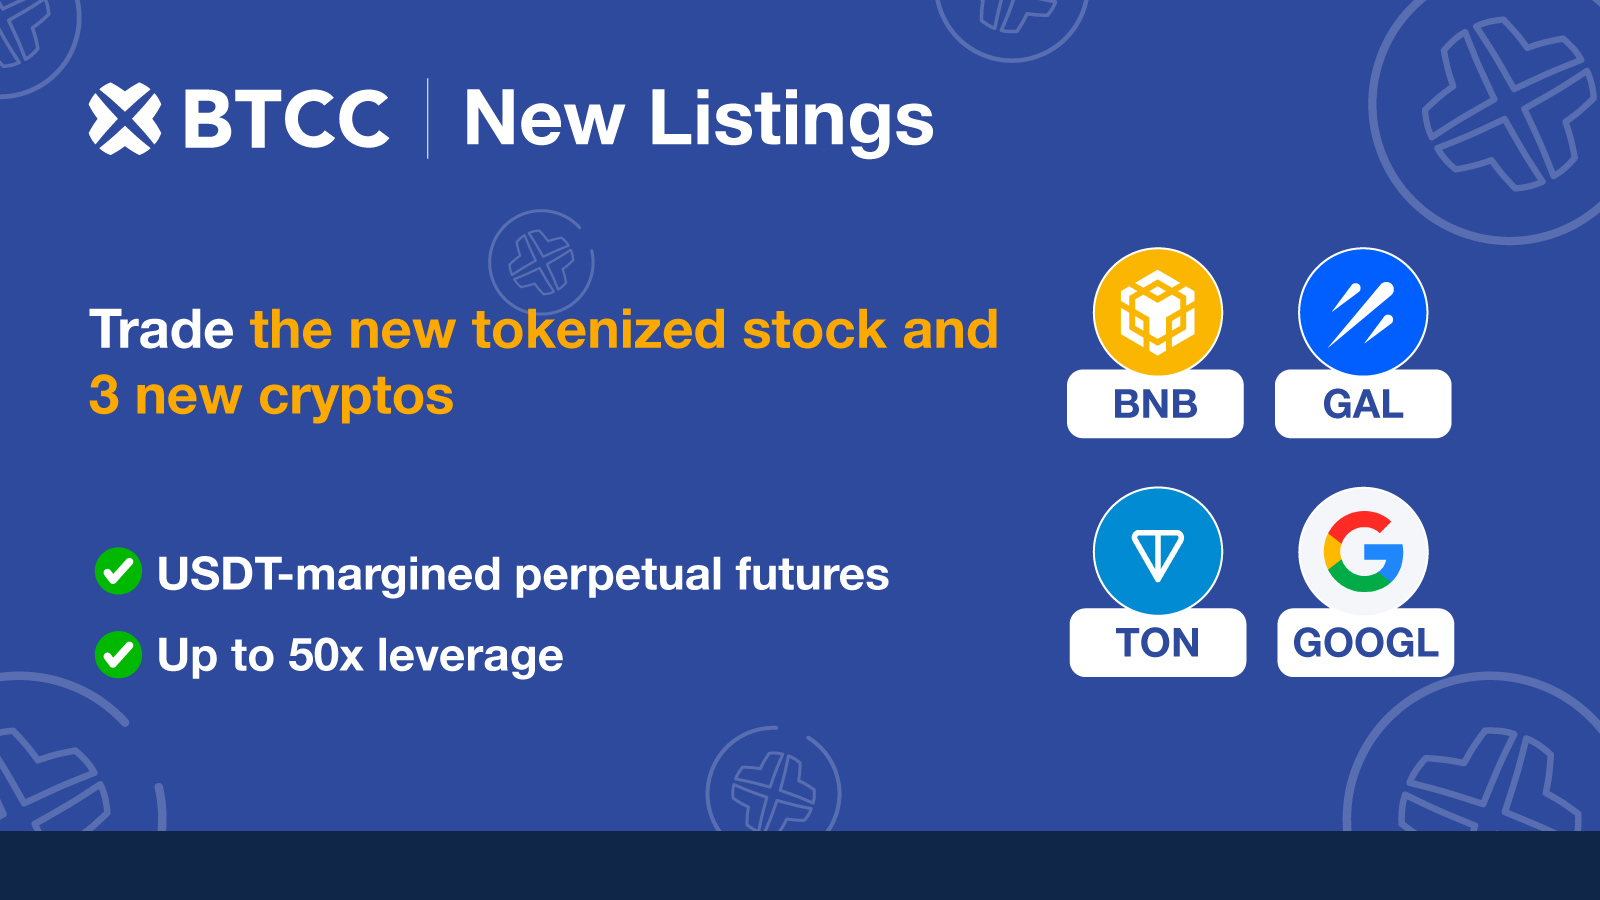 Trade the new tokenized stock and 3 cryptos on BTCC